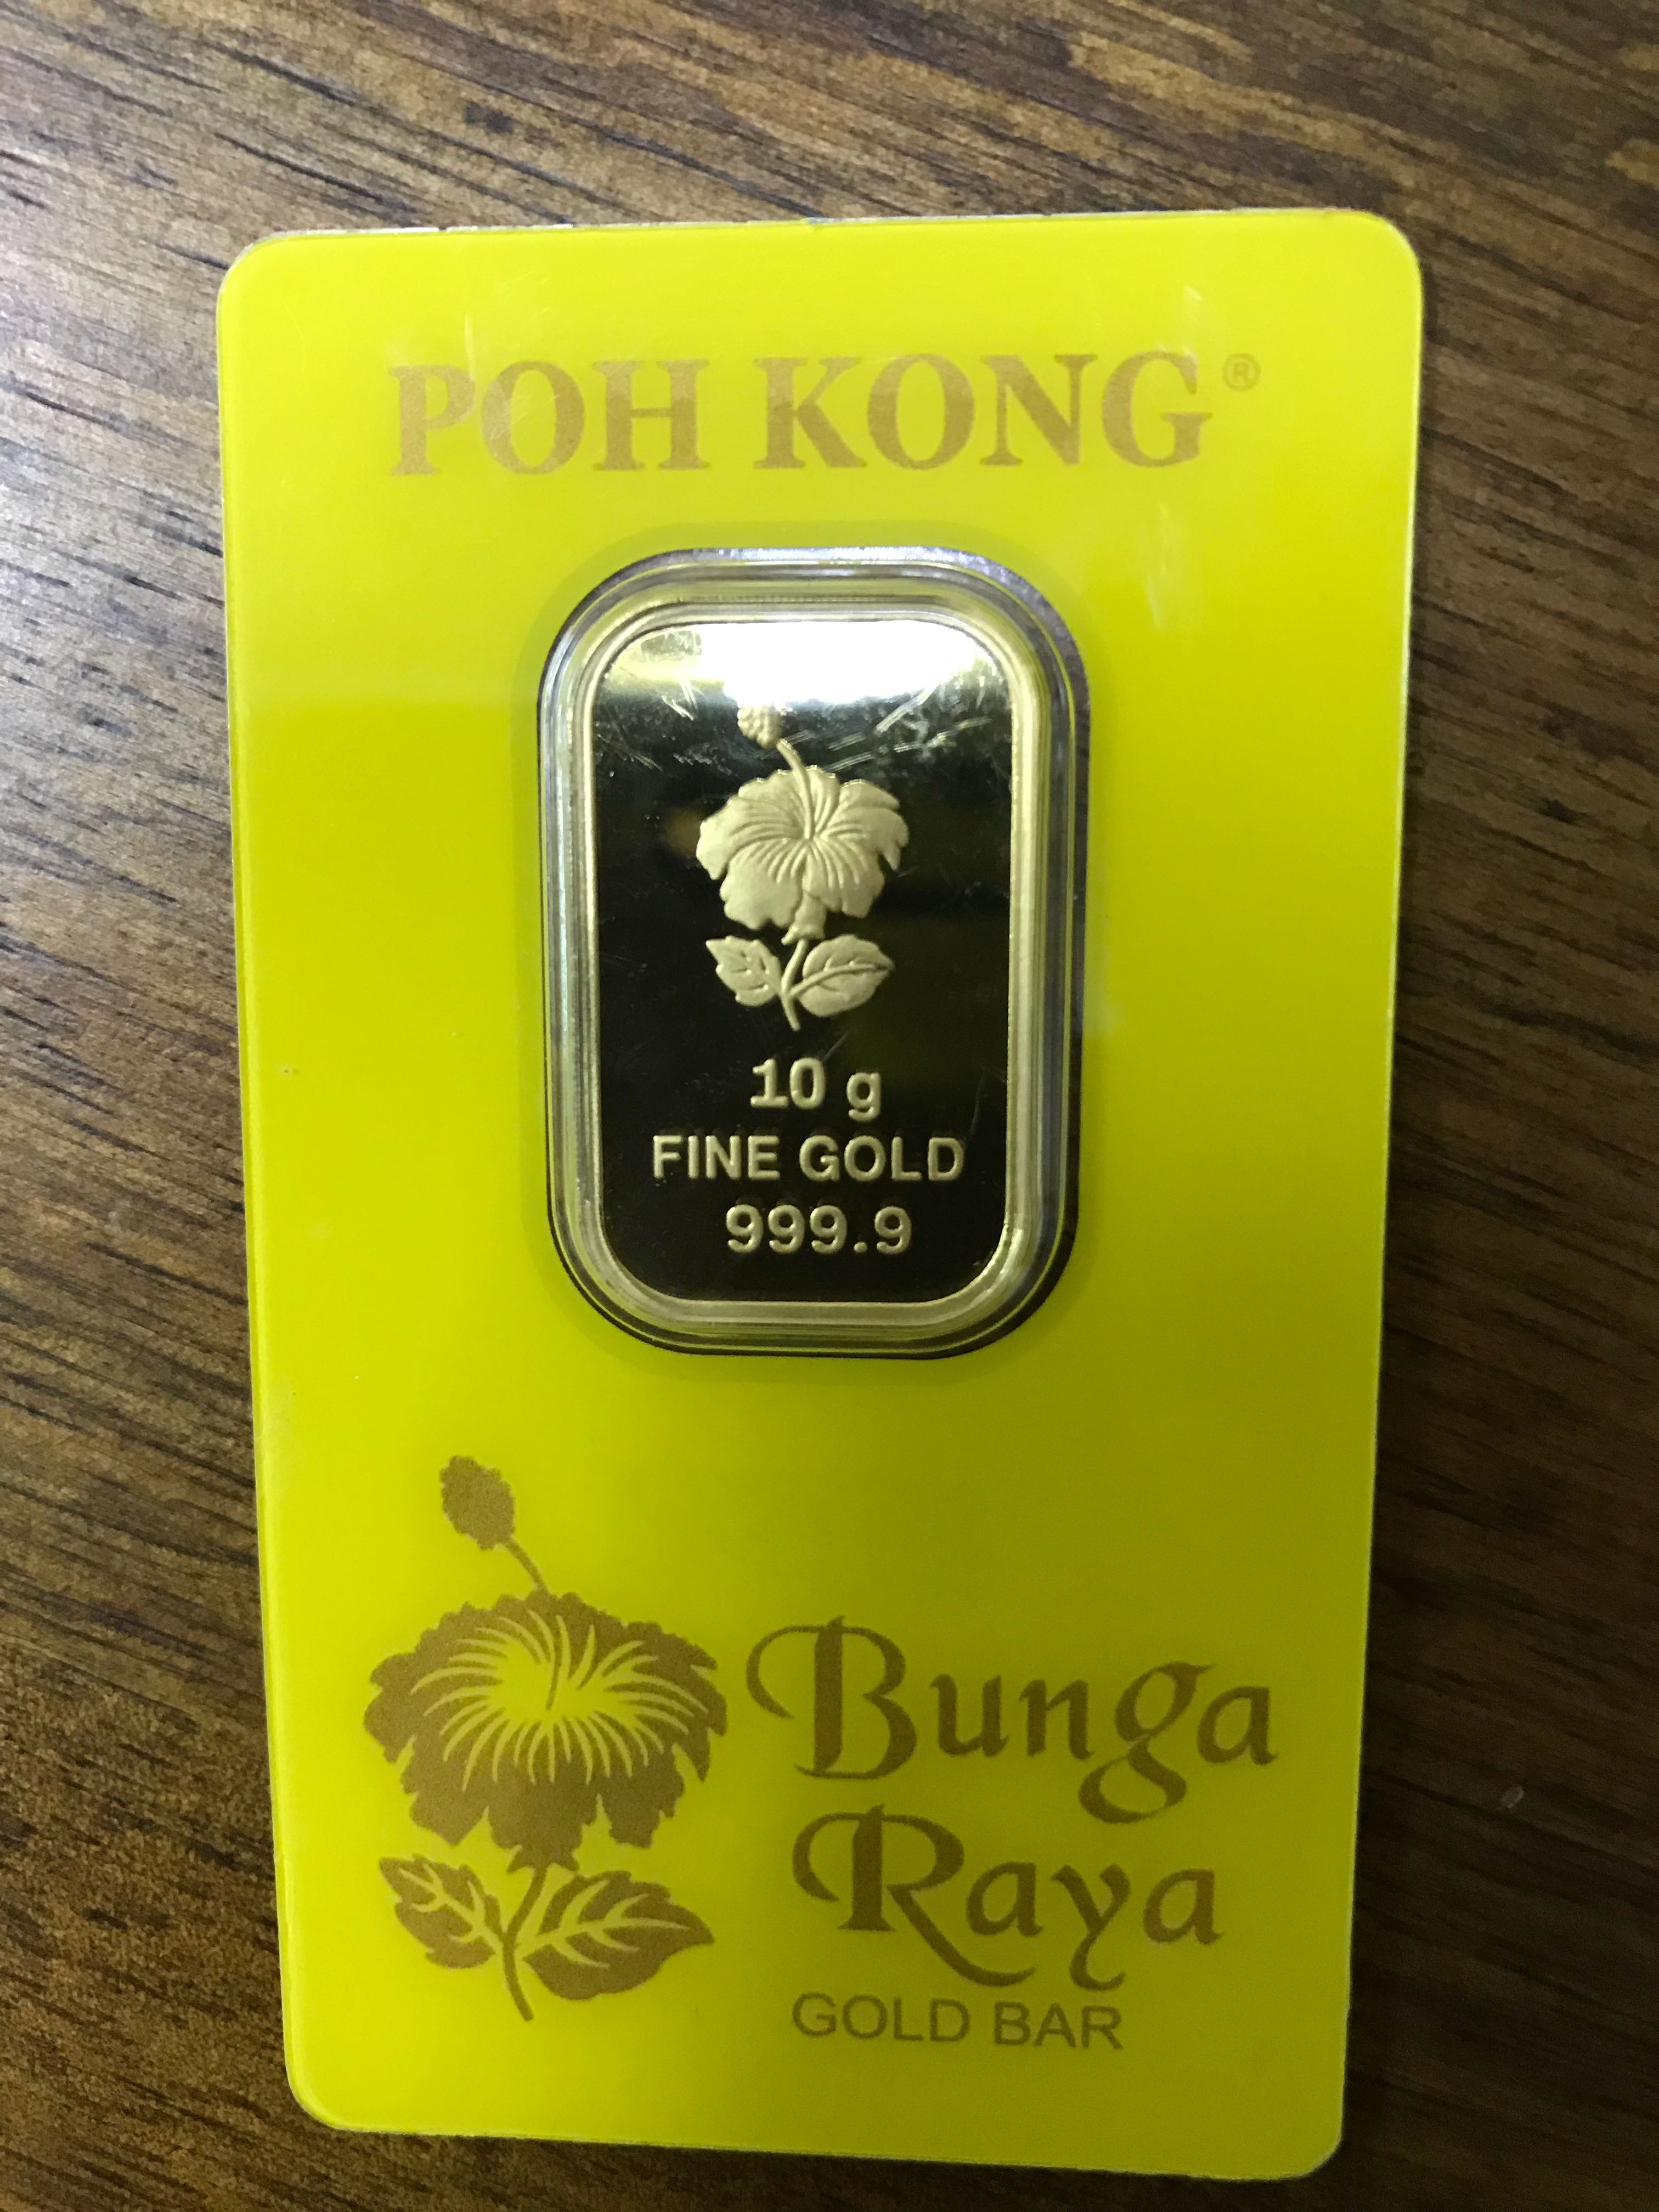 Poh kong gold bar